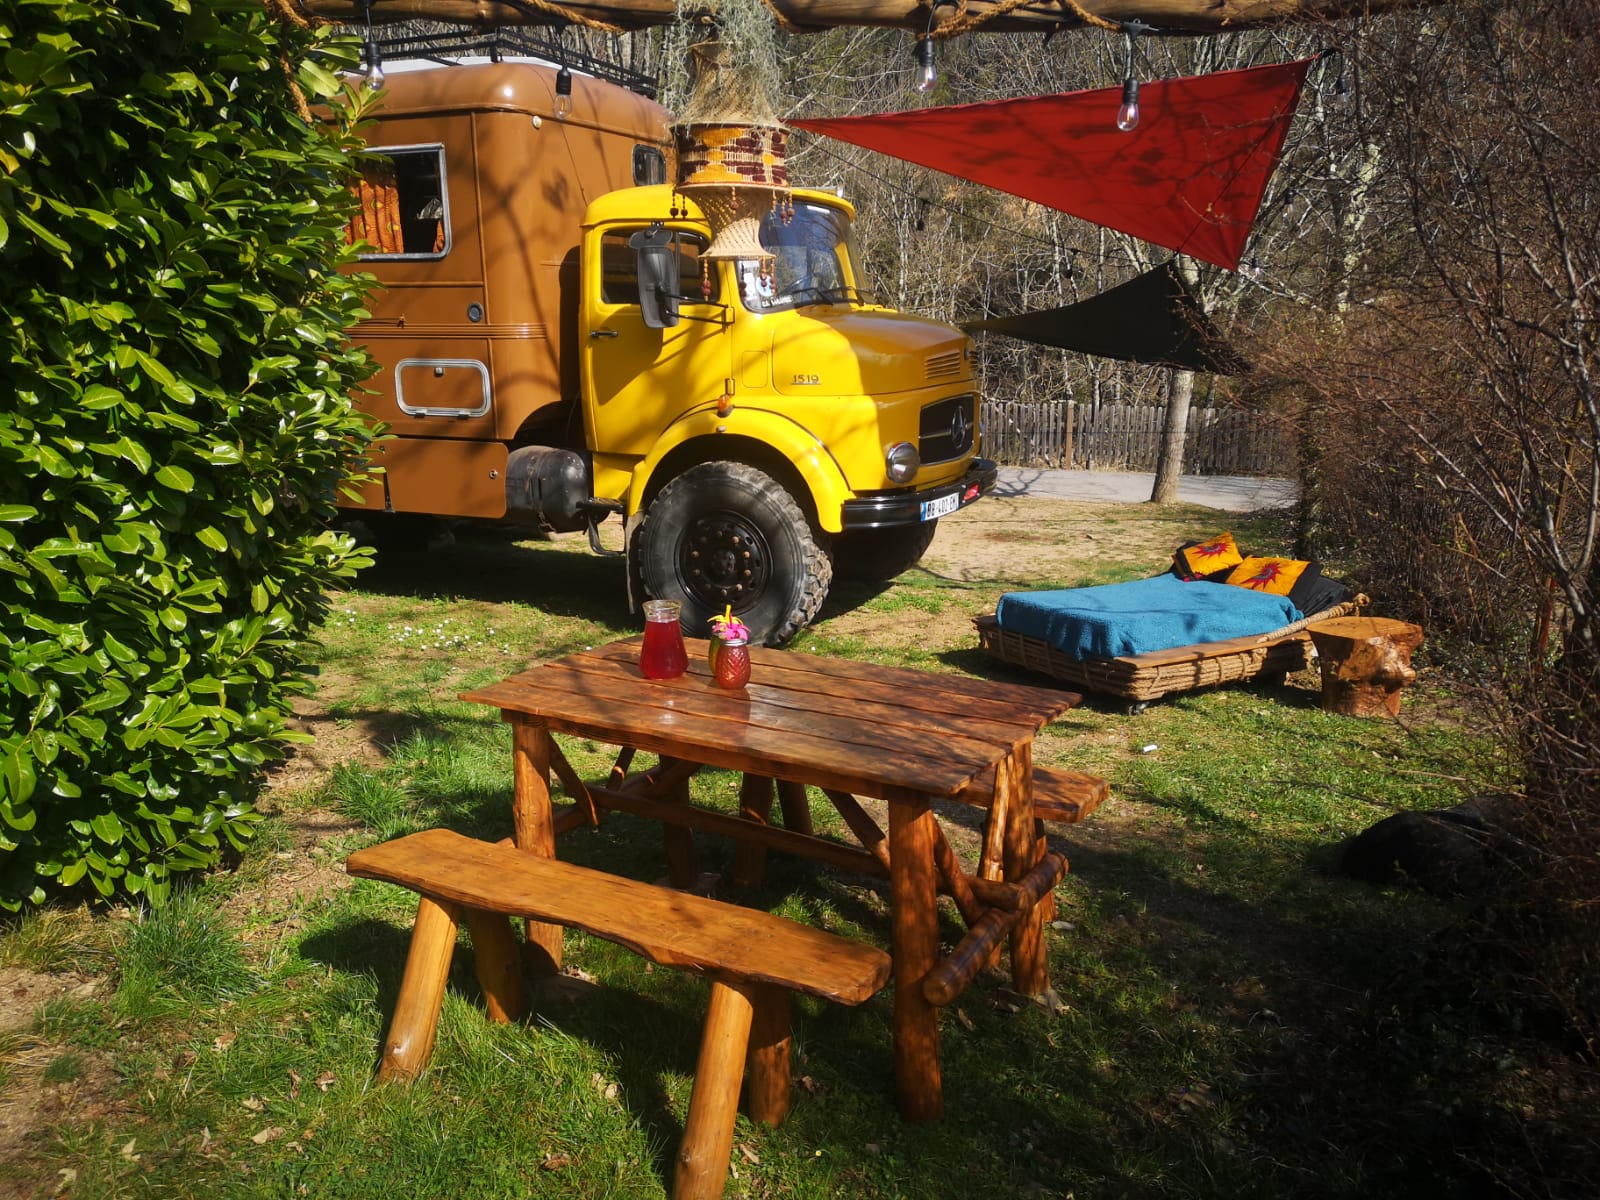 Accommodation - Lucky Star - Hébergement Insolite 2/3 Personnes - Camping Le Moulin de Gournier